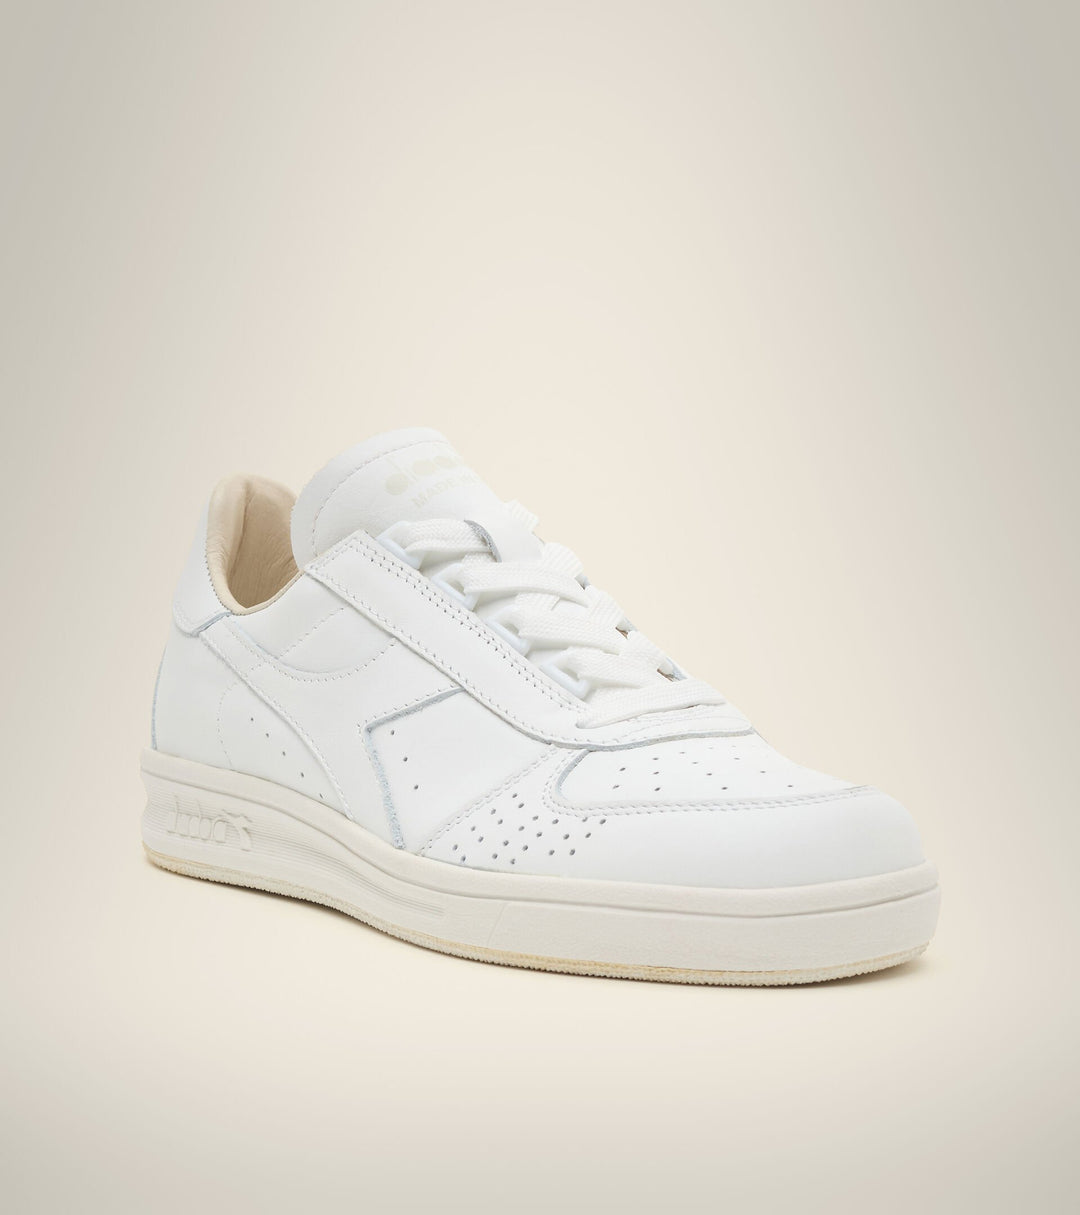 single angled side view of white on white B. elite h italia sport diadora shoe made in italy